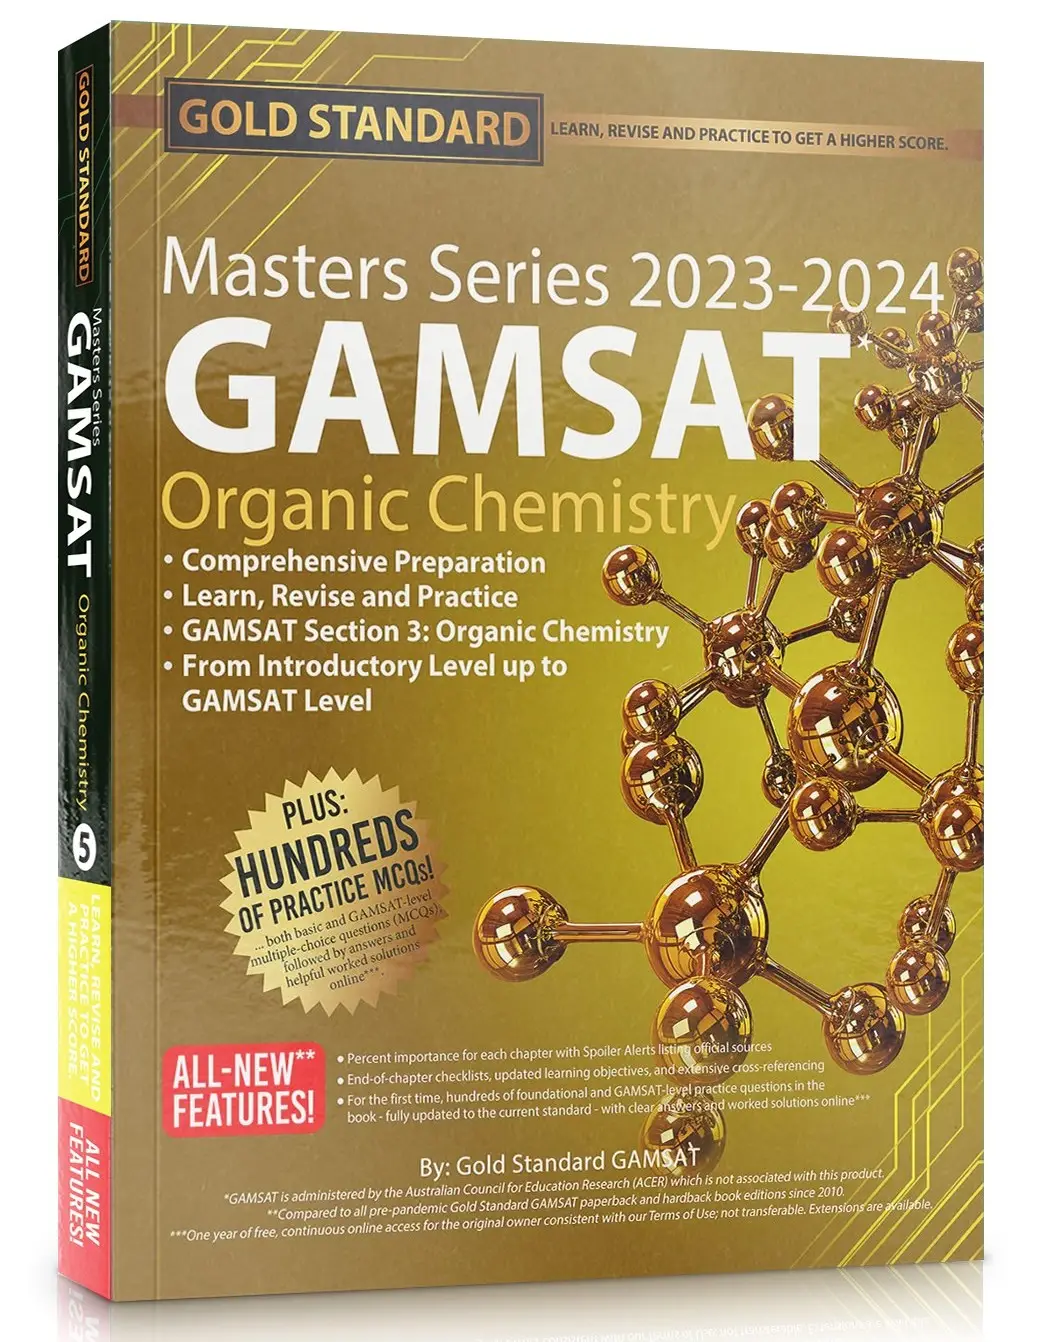 2023-2024 GAMSAT Masters Series Organic Chemistry